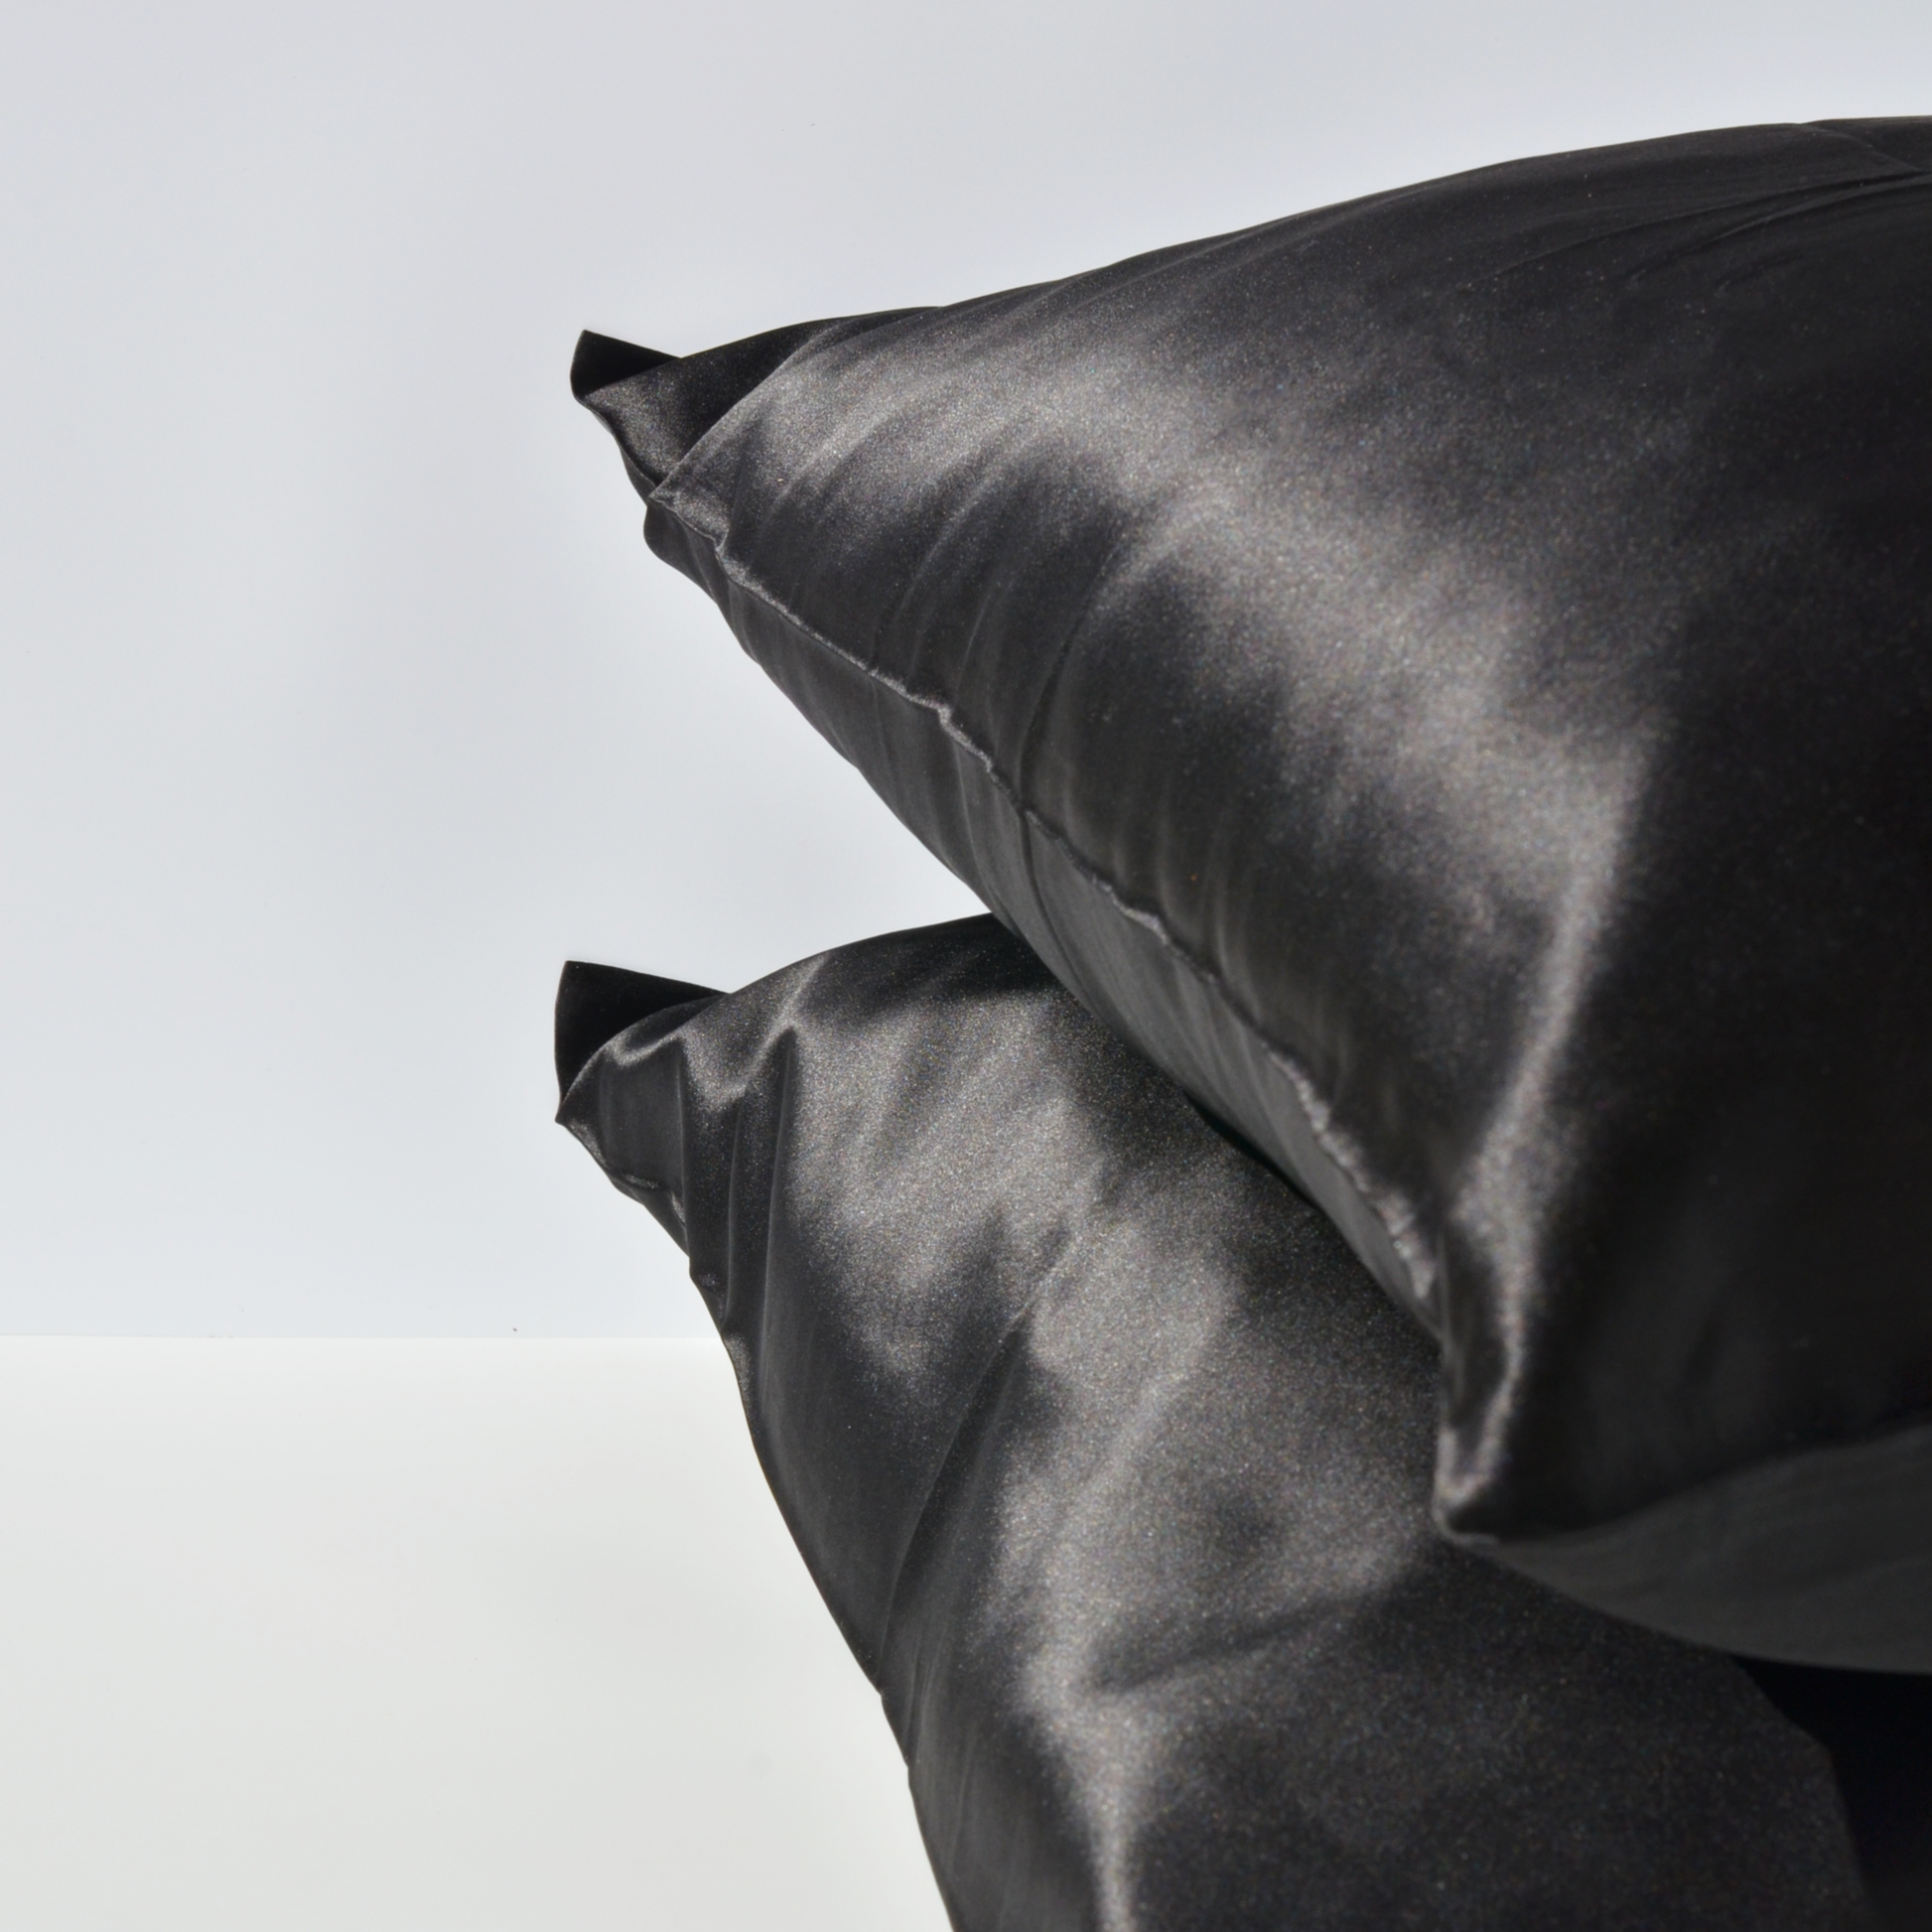 Midnight Black Silk Pillowcase – Sylk and Sleep Co.